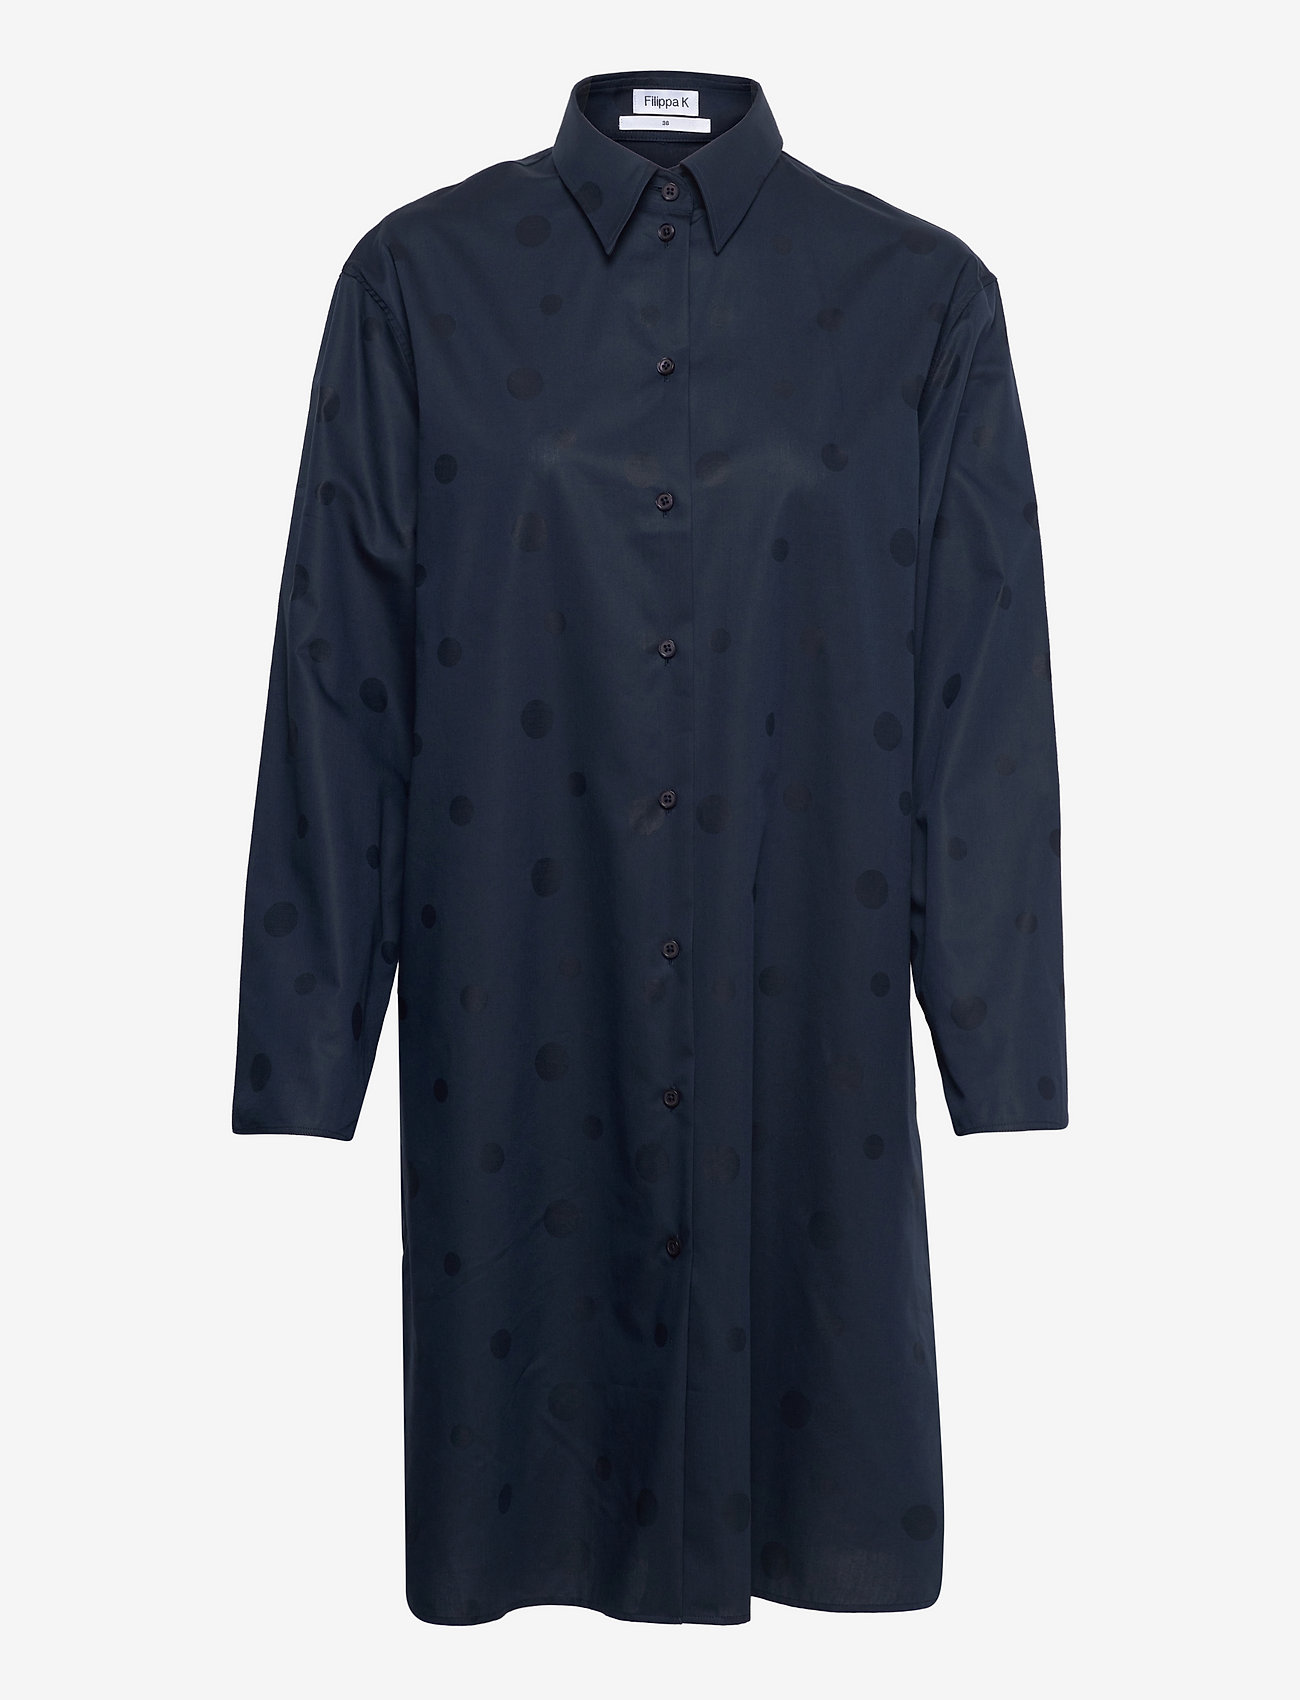 Filippa K - Astrid Dress - shirt dresses - navy - 0